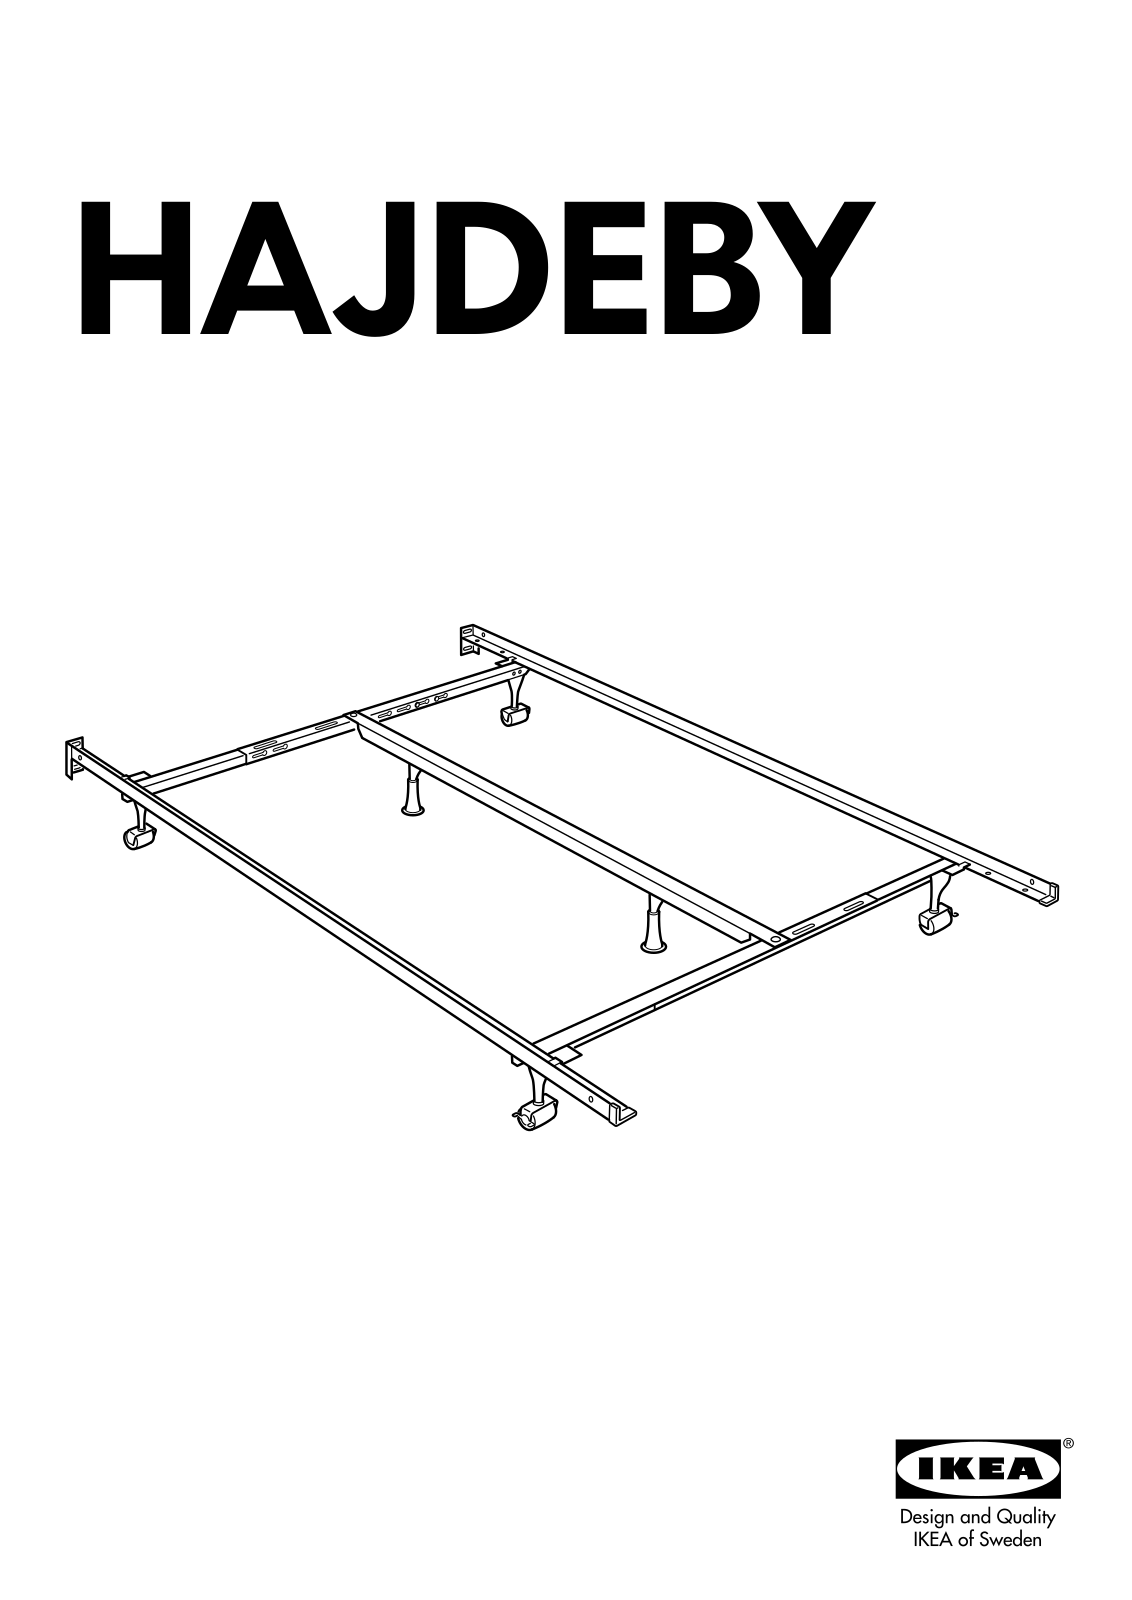 IKEA HAJDEBY User Manual